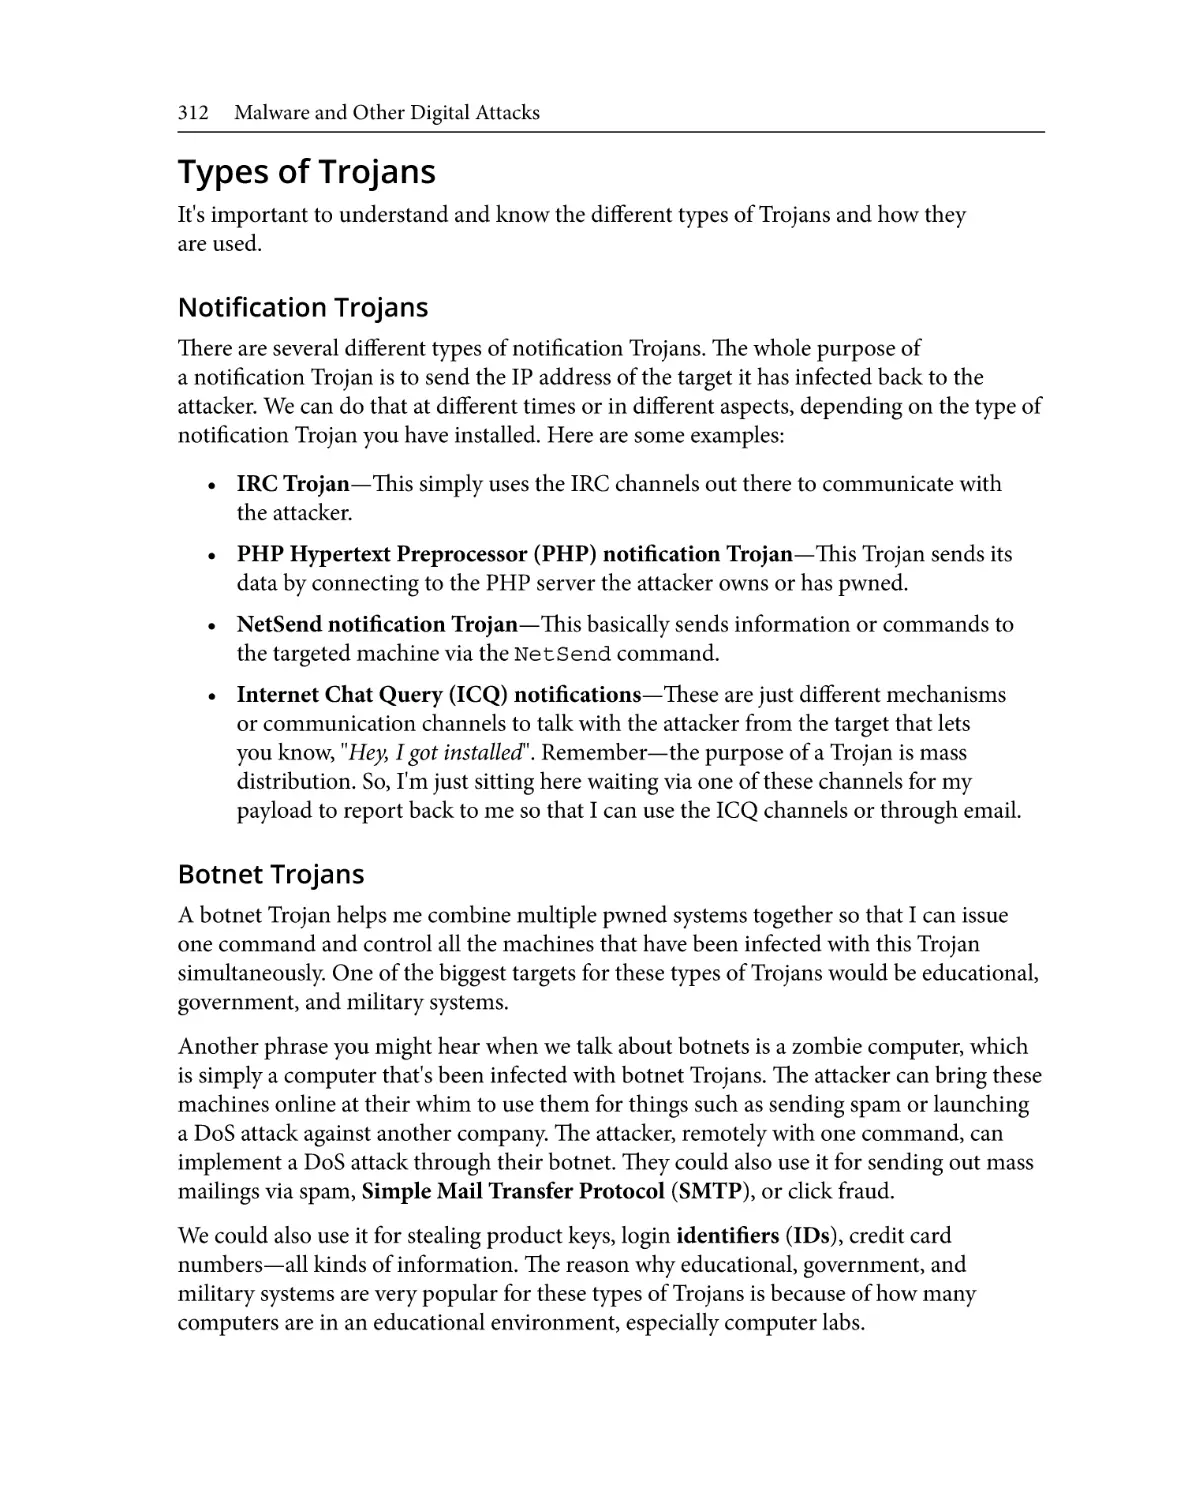 Types of Trojans